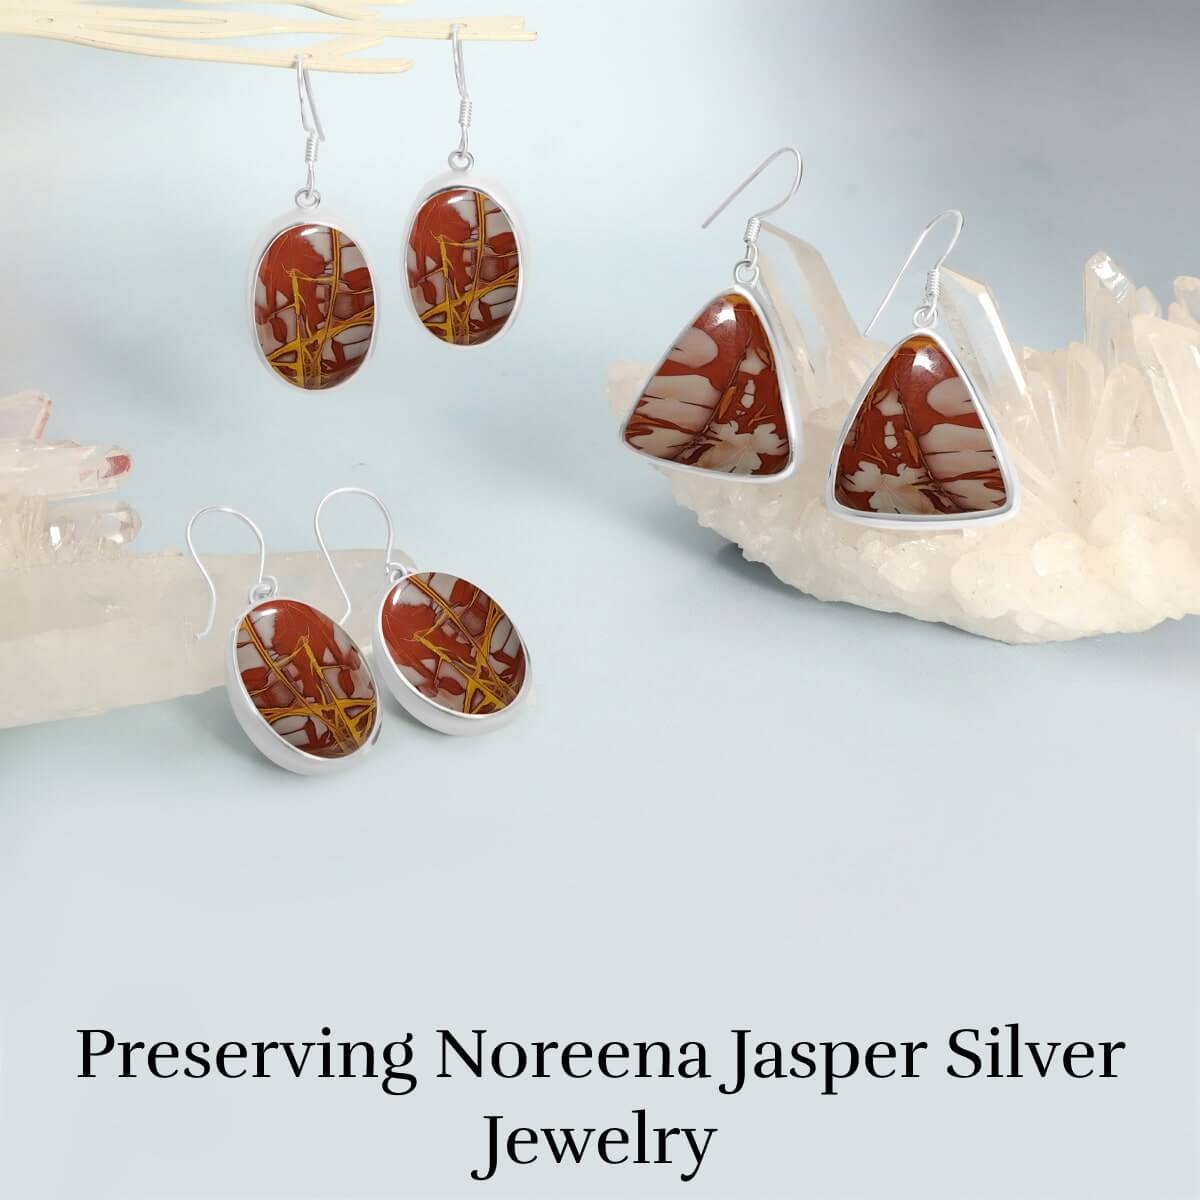 Noreena Jasper 925 Sterling Silver Jewelry